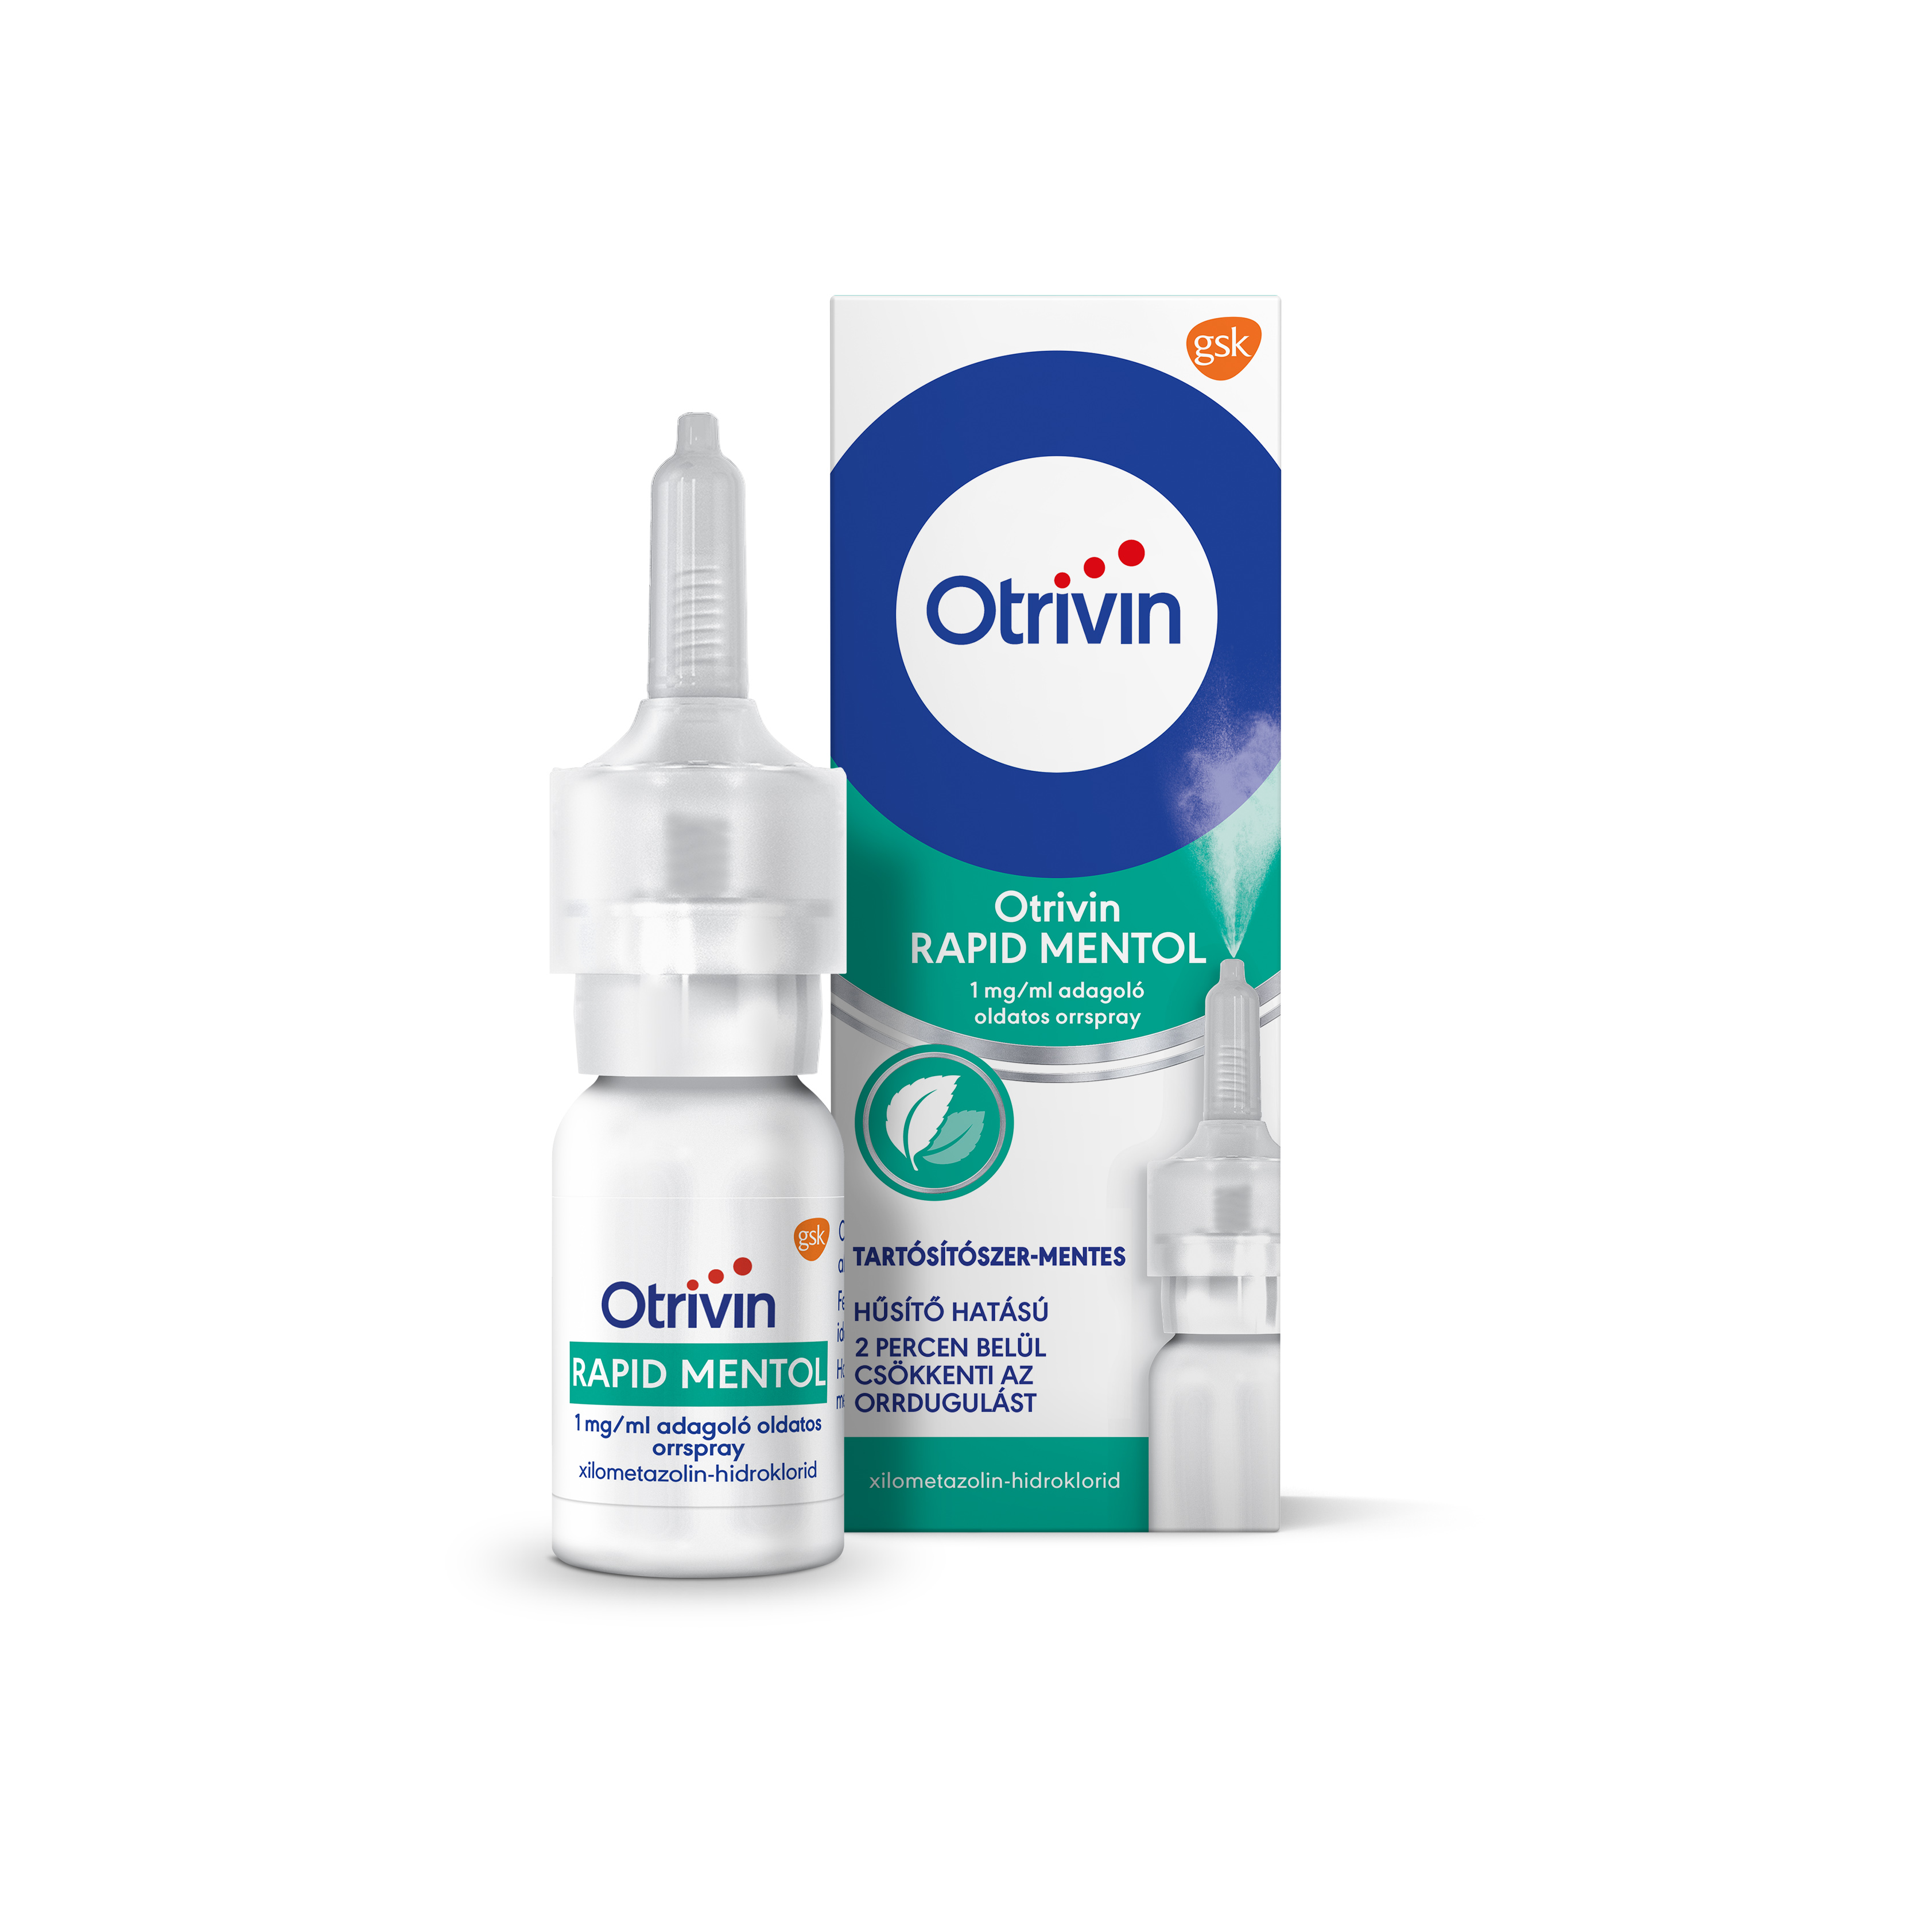 Otrivin Rapid Menthol 1m/ml adagoló oldatos orrspray 